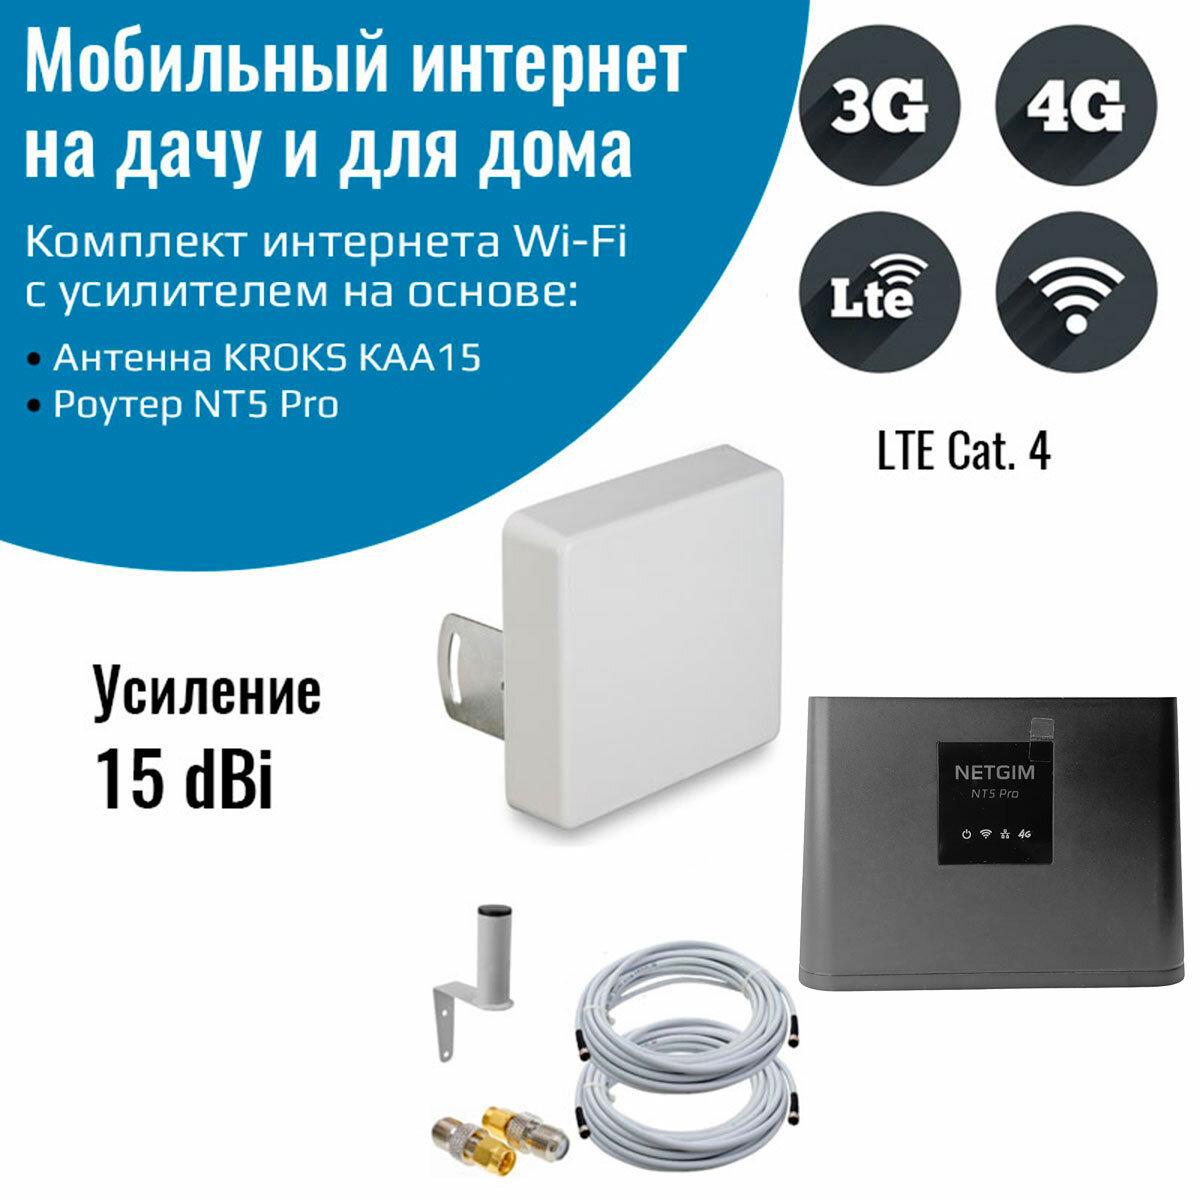 Комплект интернета WiFi для дачи и дома 3G/4G/LTE – NT5 Pro / CPF908-P с антенной КАА15-1700/2700F MIMO 15ДБ